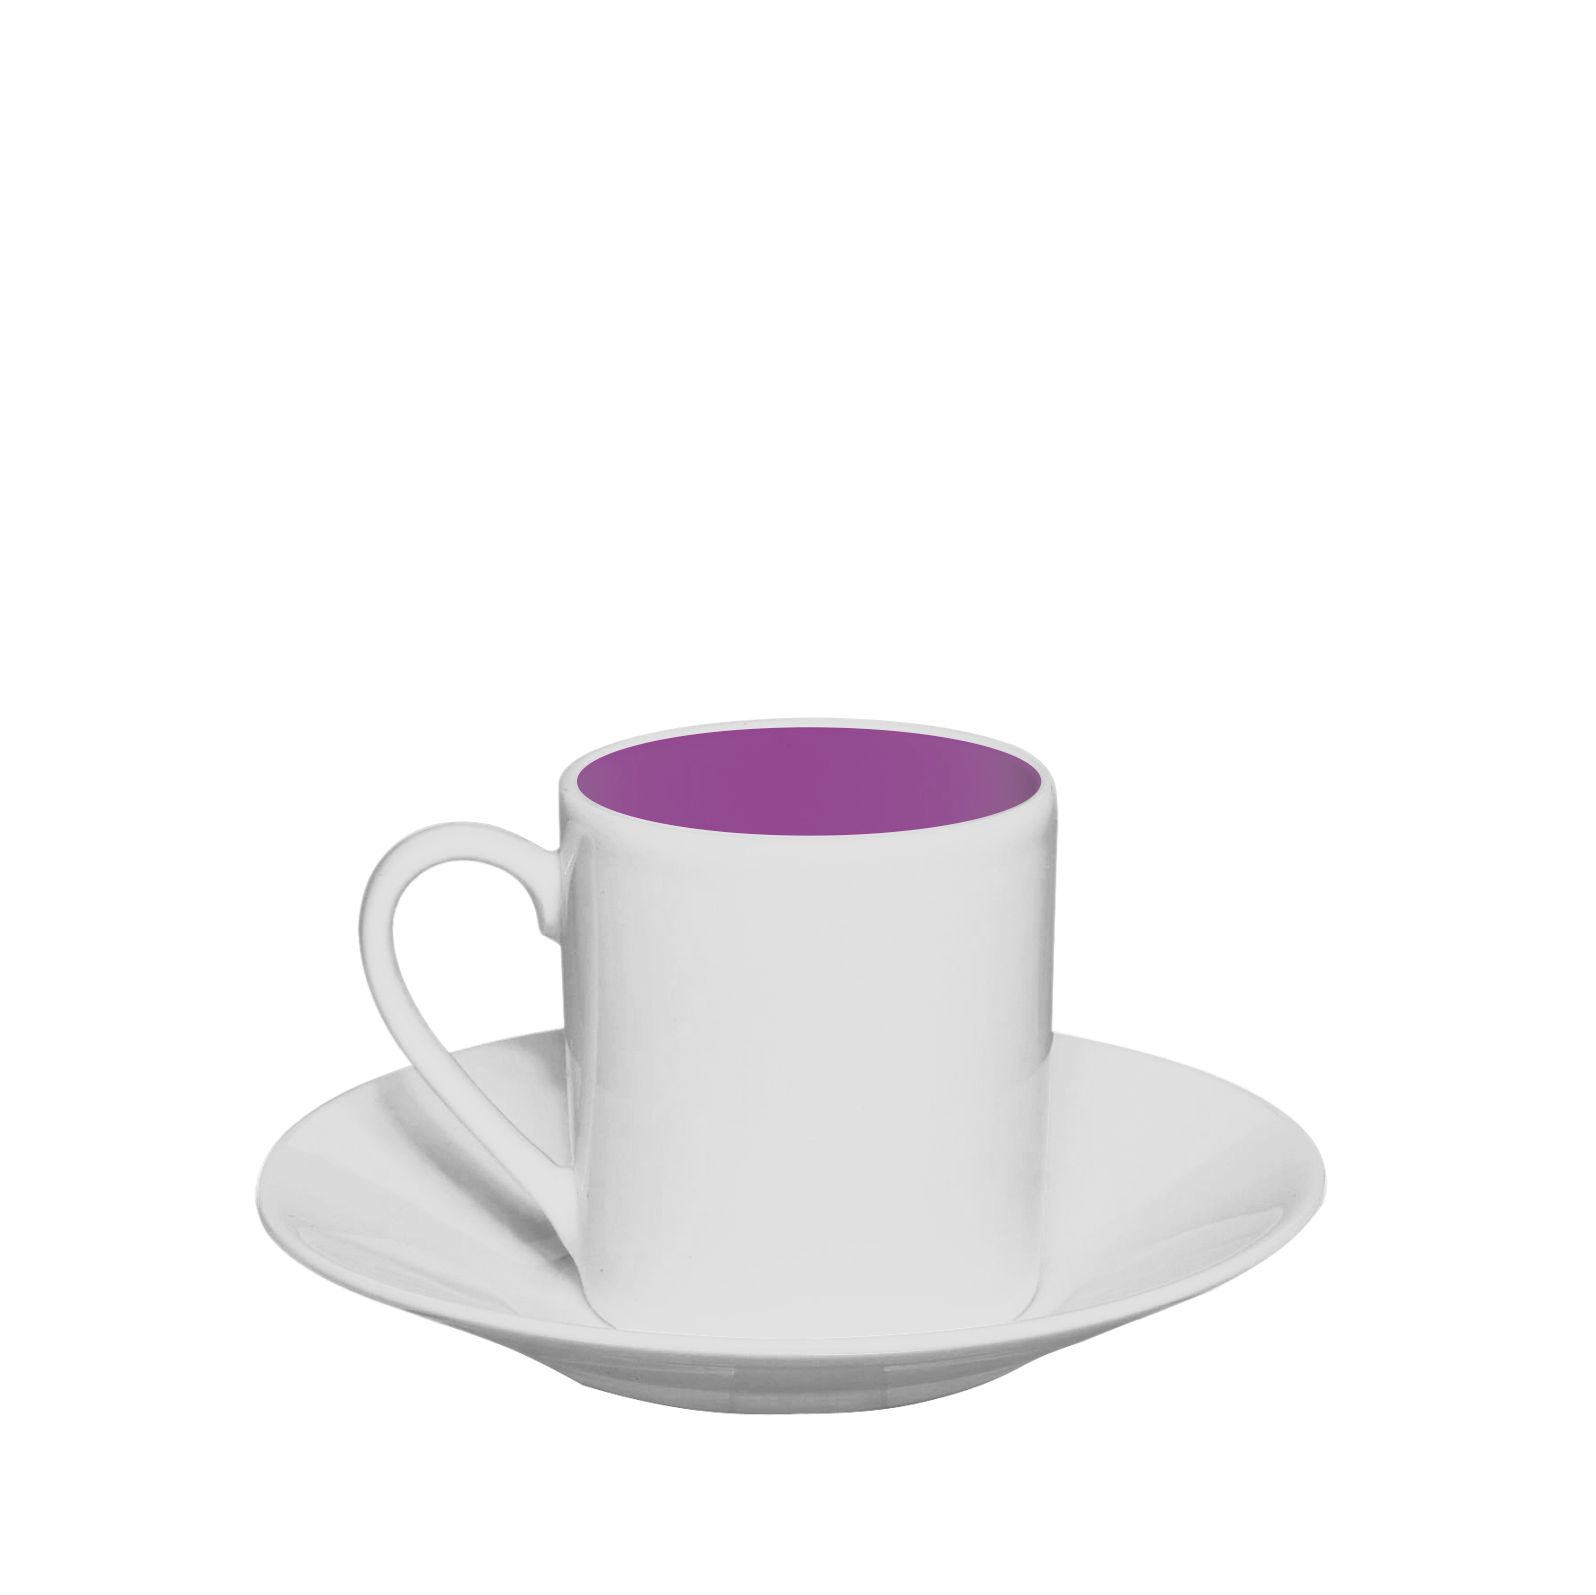 /sites/default/files/2020-03/Fili%C5%BCanka_classic_espresso_white-purple.jpg